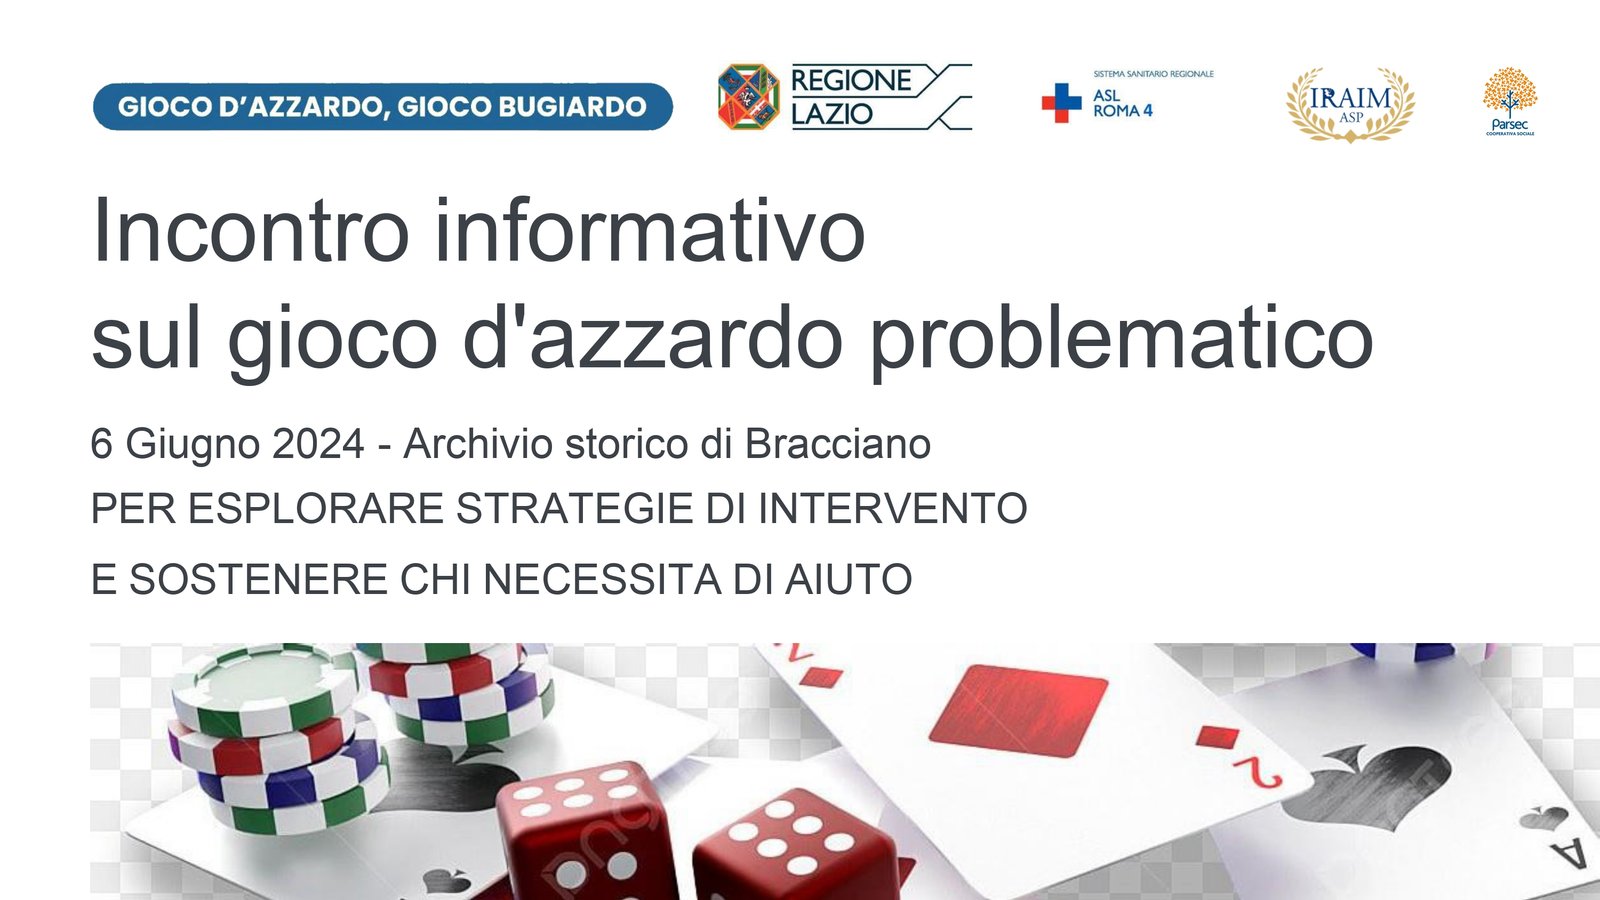 BRACCIANO GAP_pages-to-jpg-0001.jpg